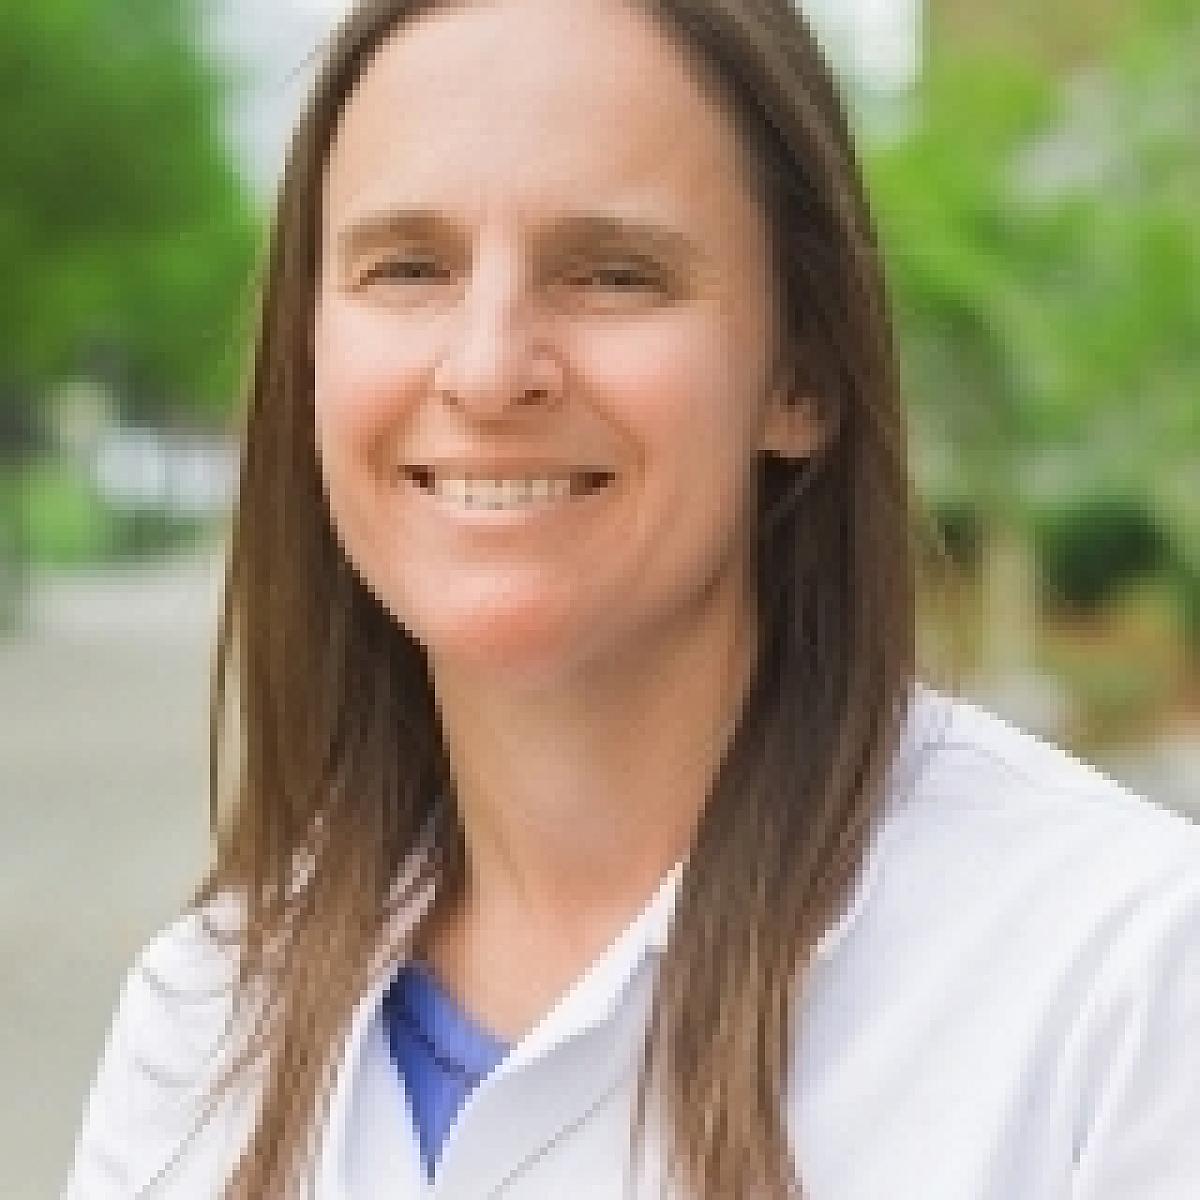 Dr. Kate Harris